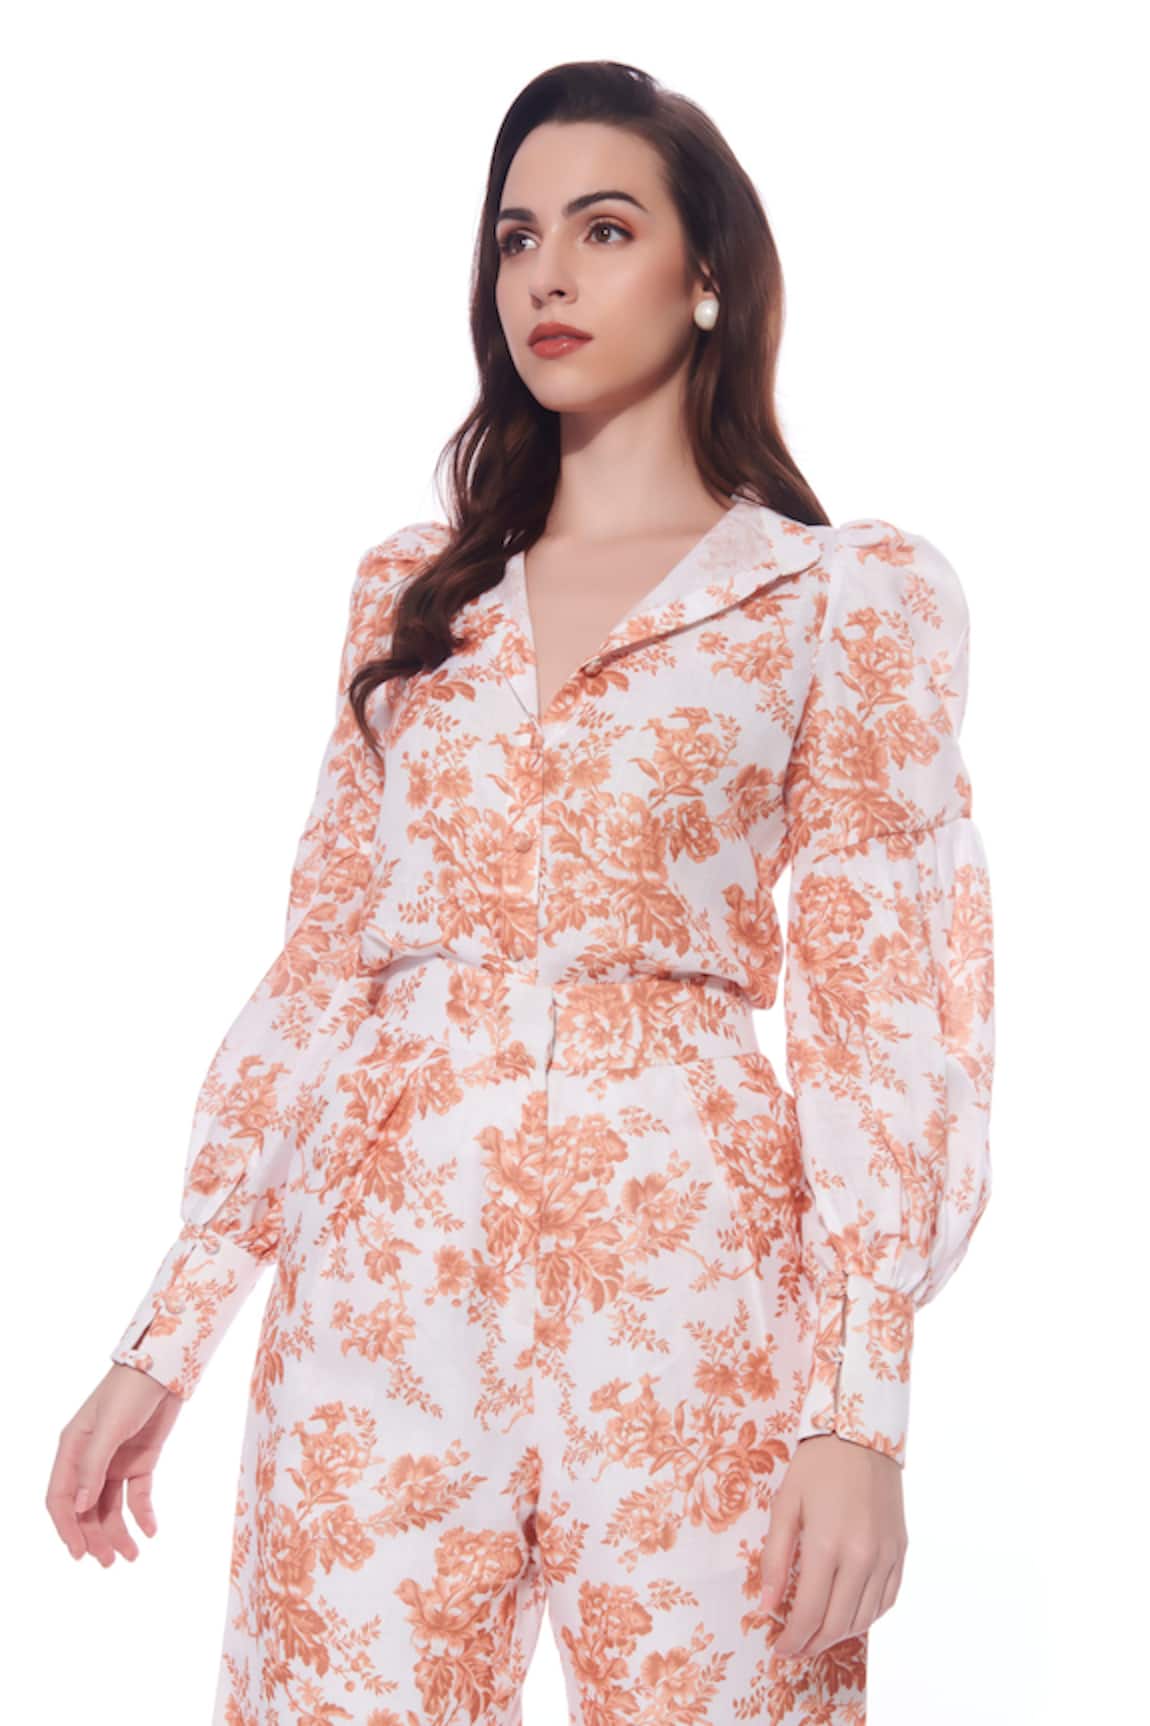 Verano by Tanya Magnolia Floral Print Linen Shirt